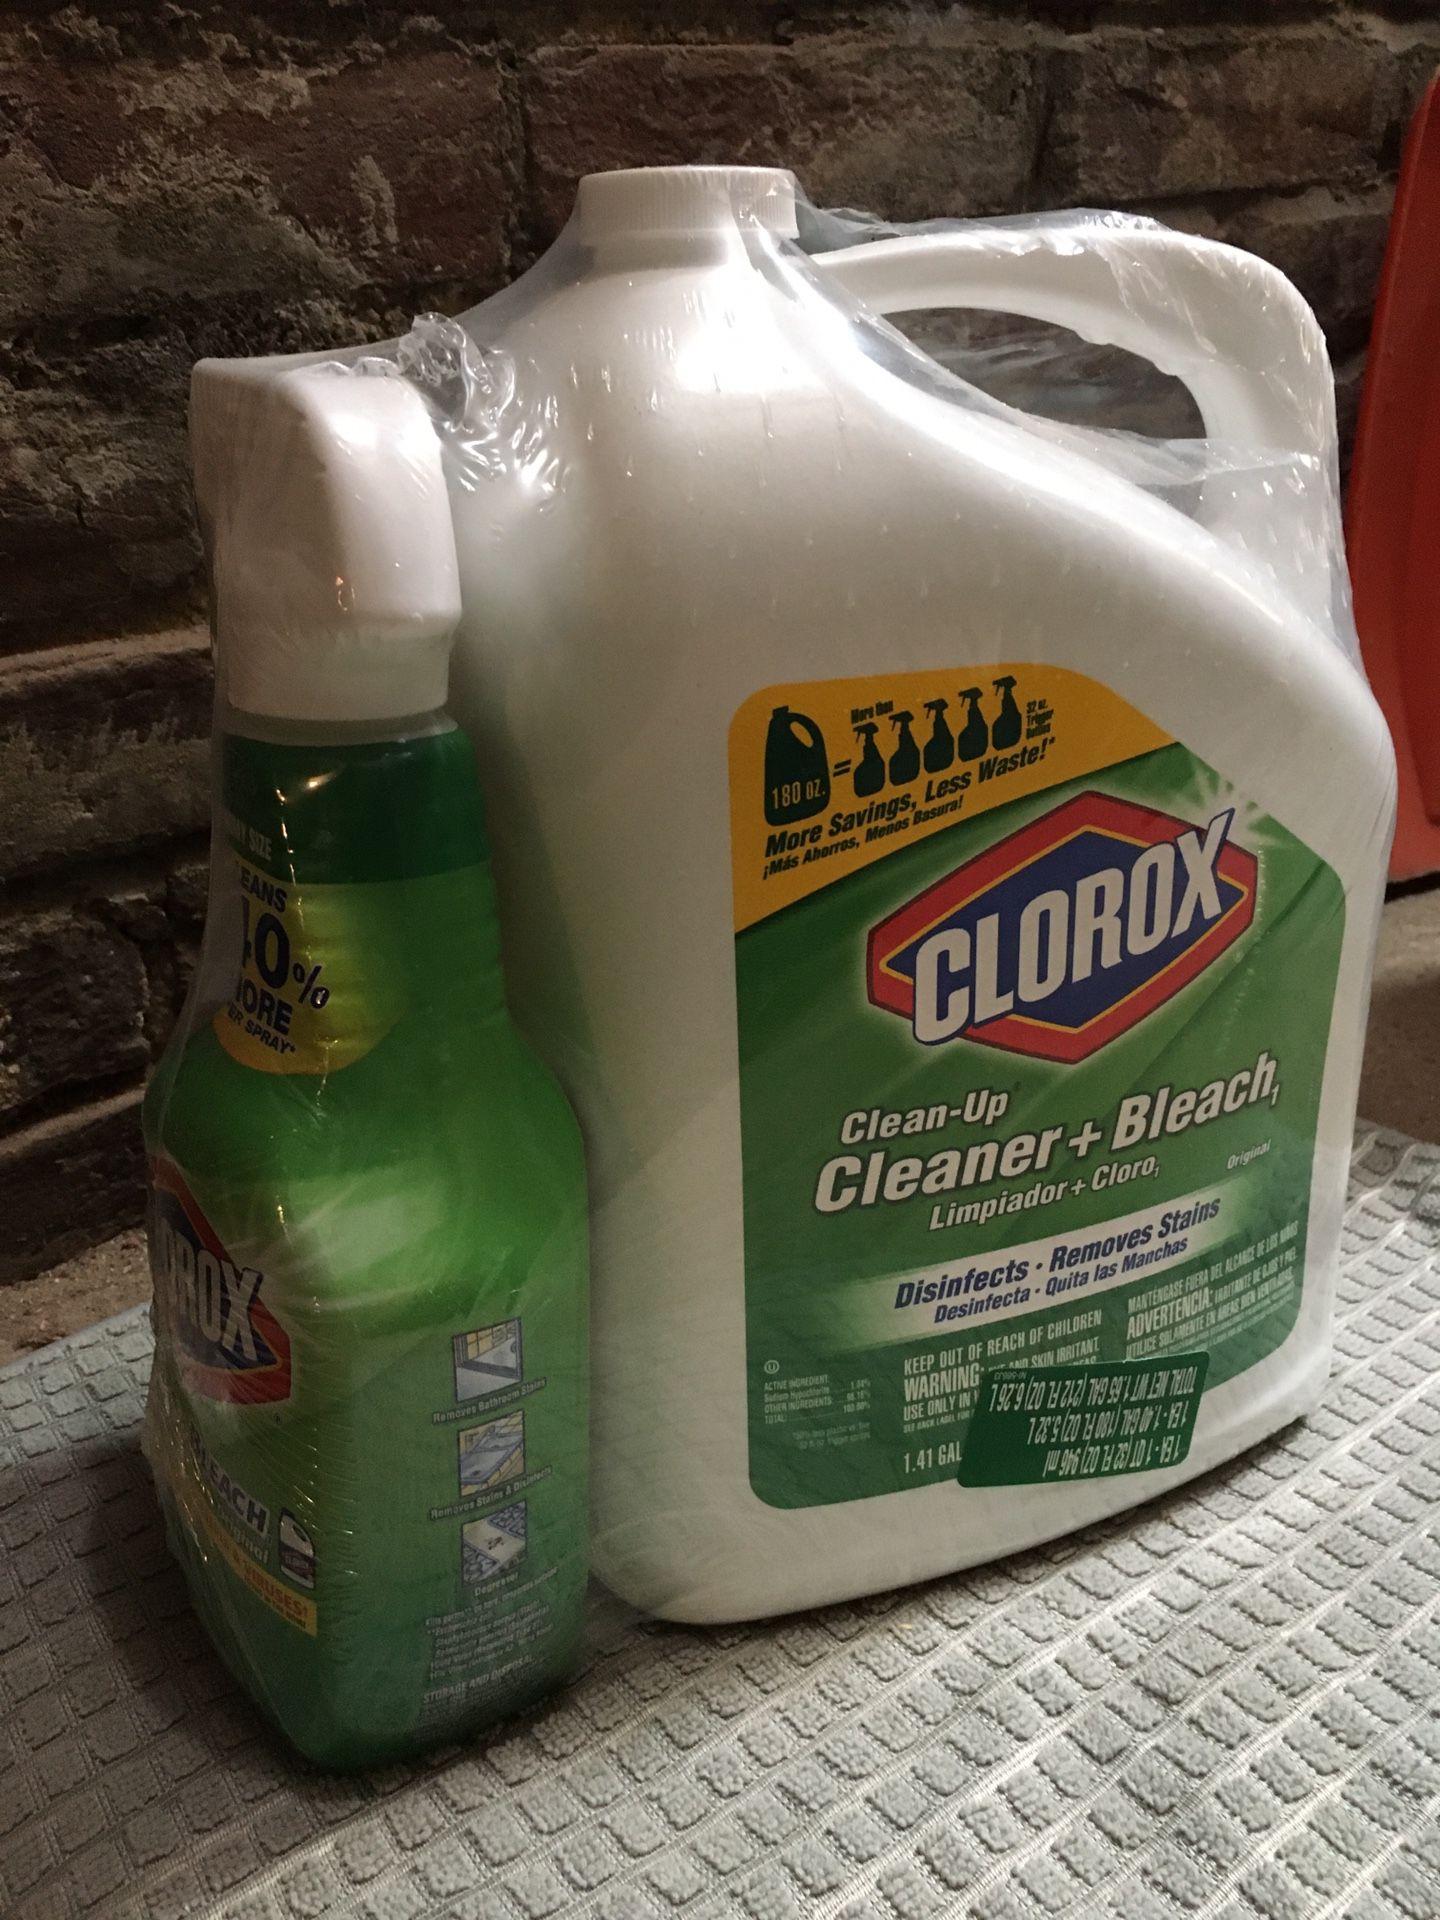 Clorox cleanup cleaner + bleach bundle